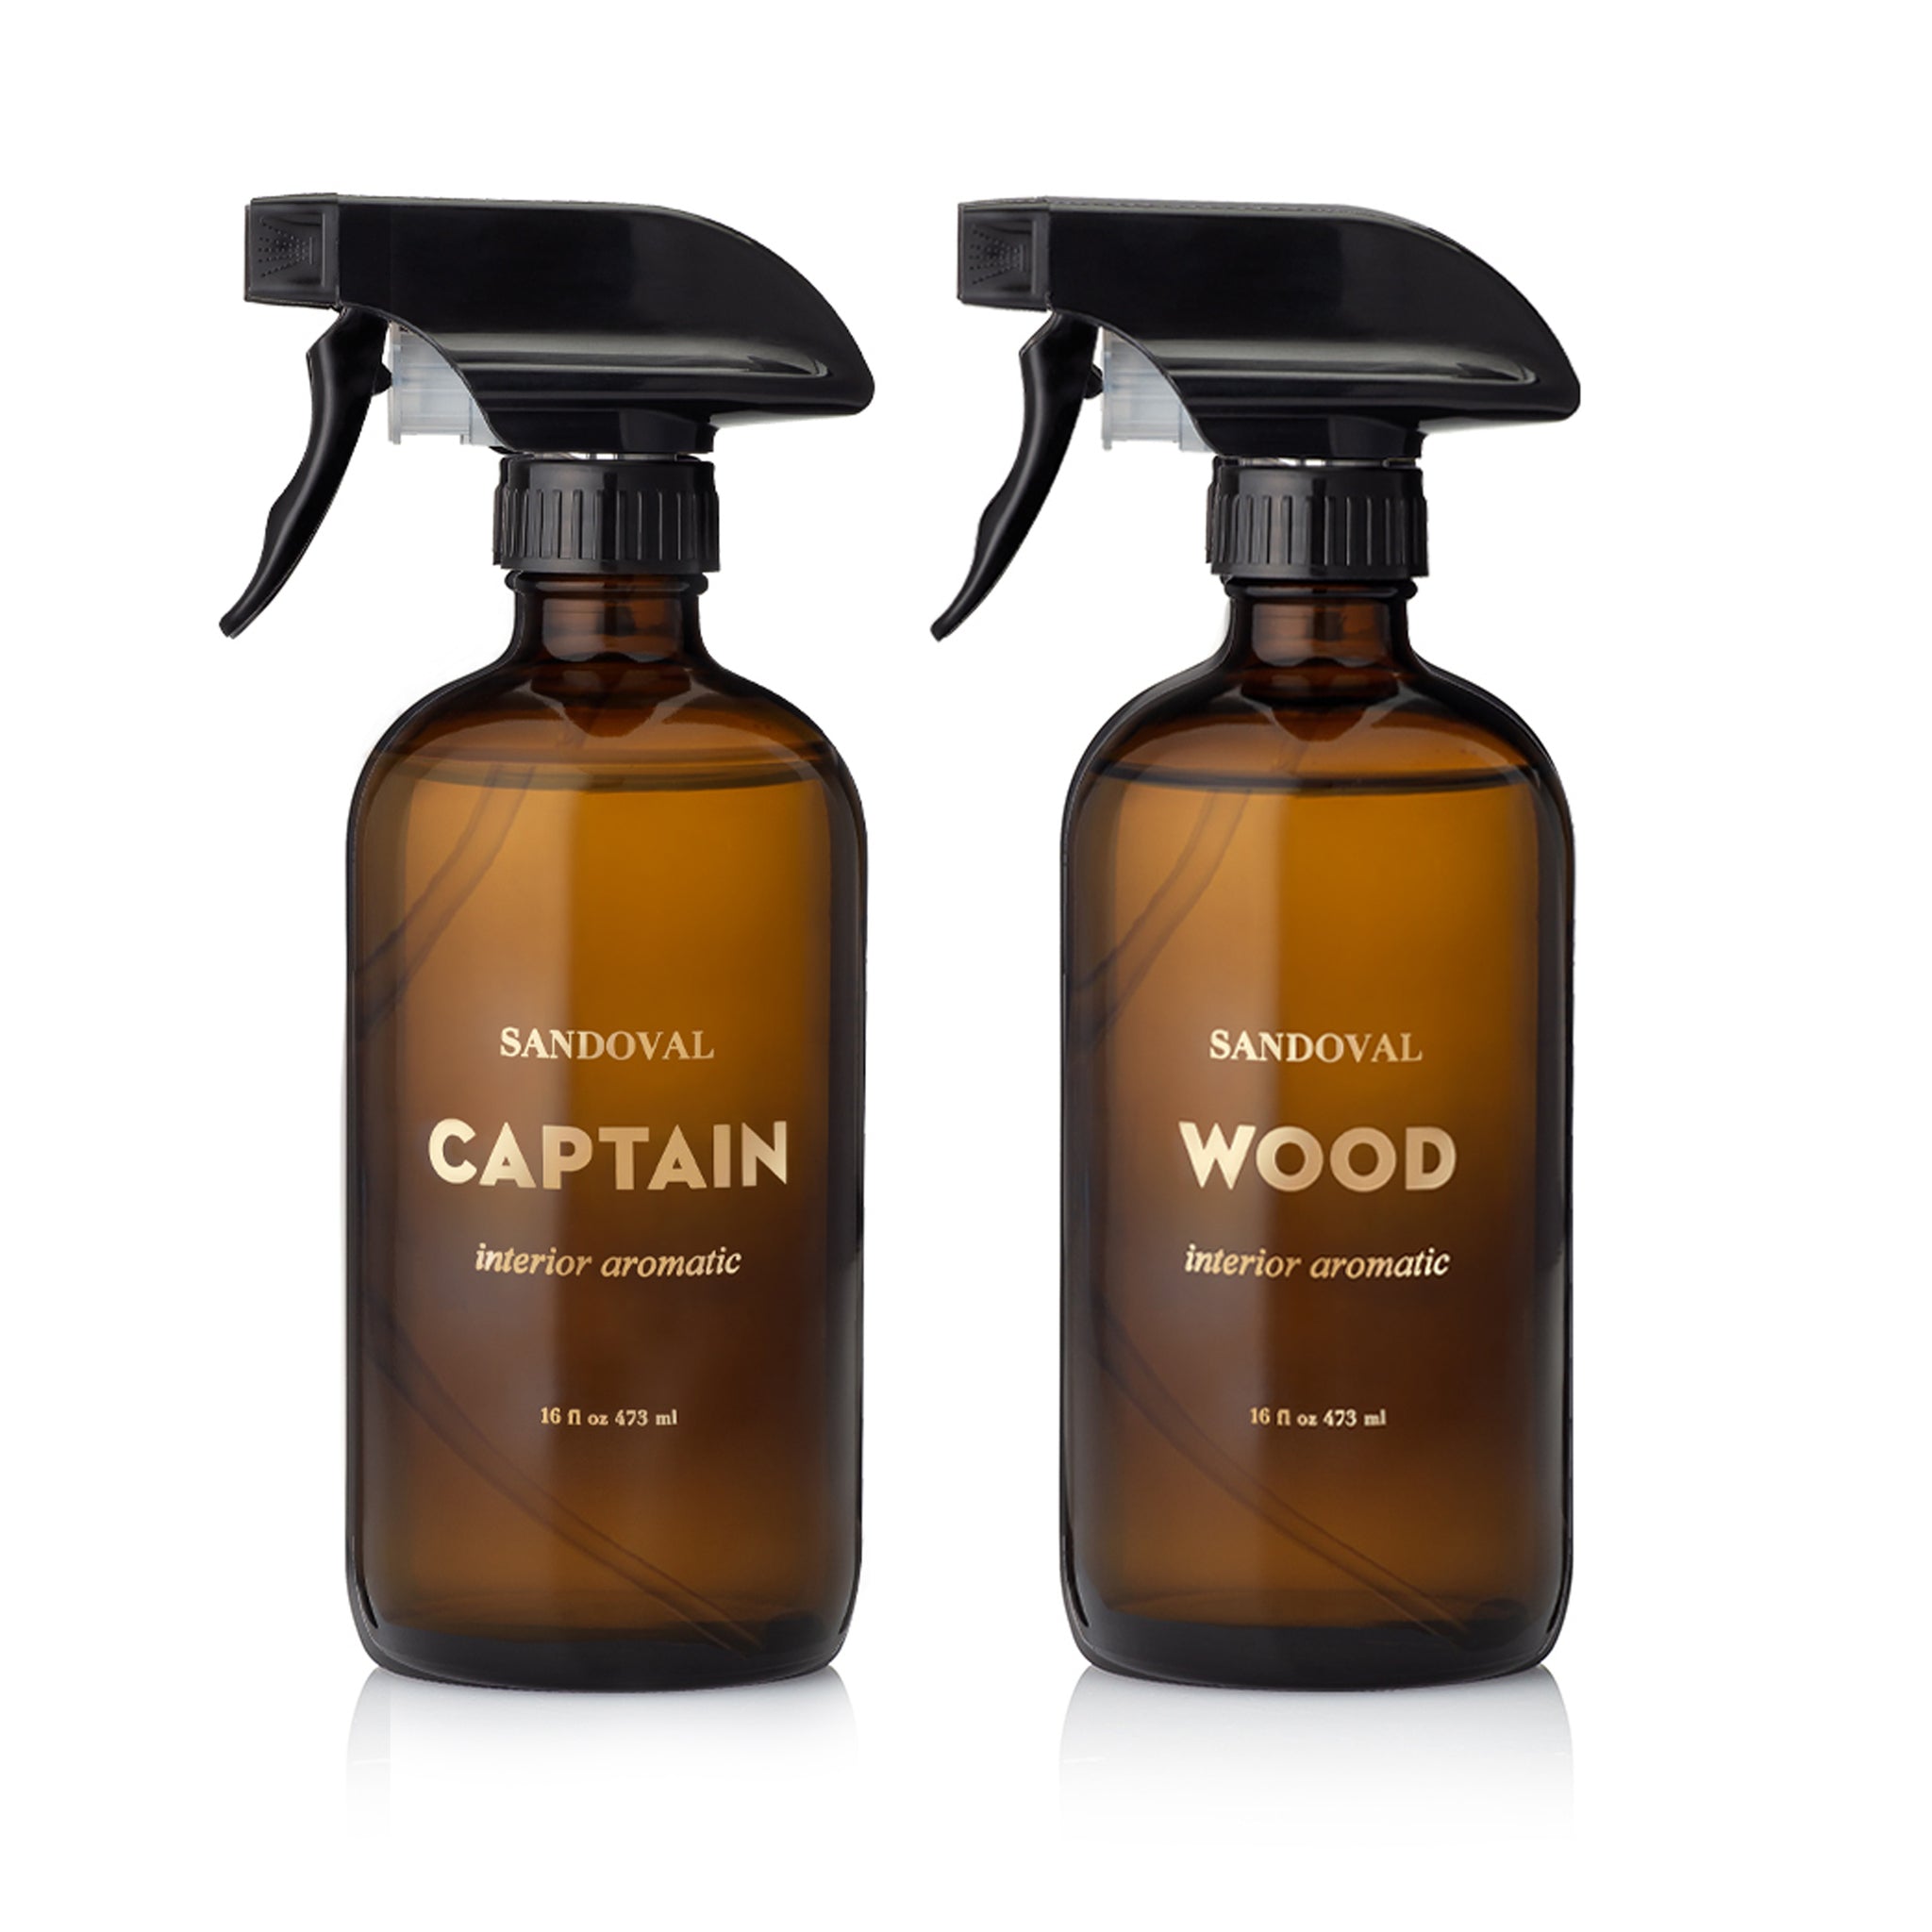 Wood & Captain interior aromatic room spray, linen spray, air freshener.cedarwood, lavender,sandalwood oil. amber glass 16 ounce b